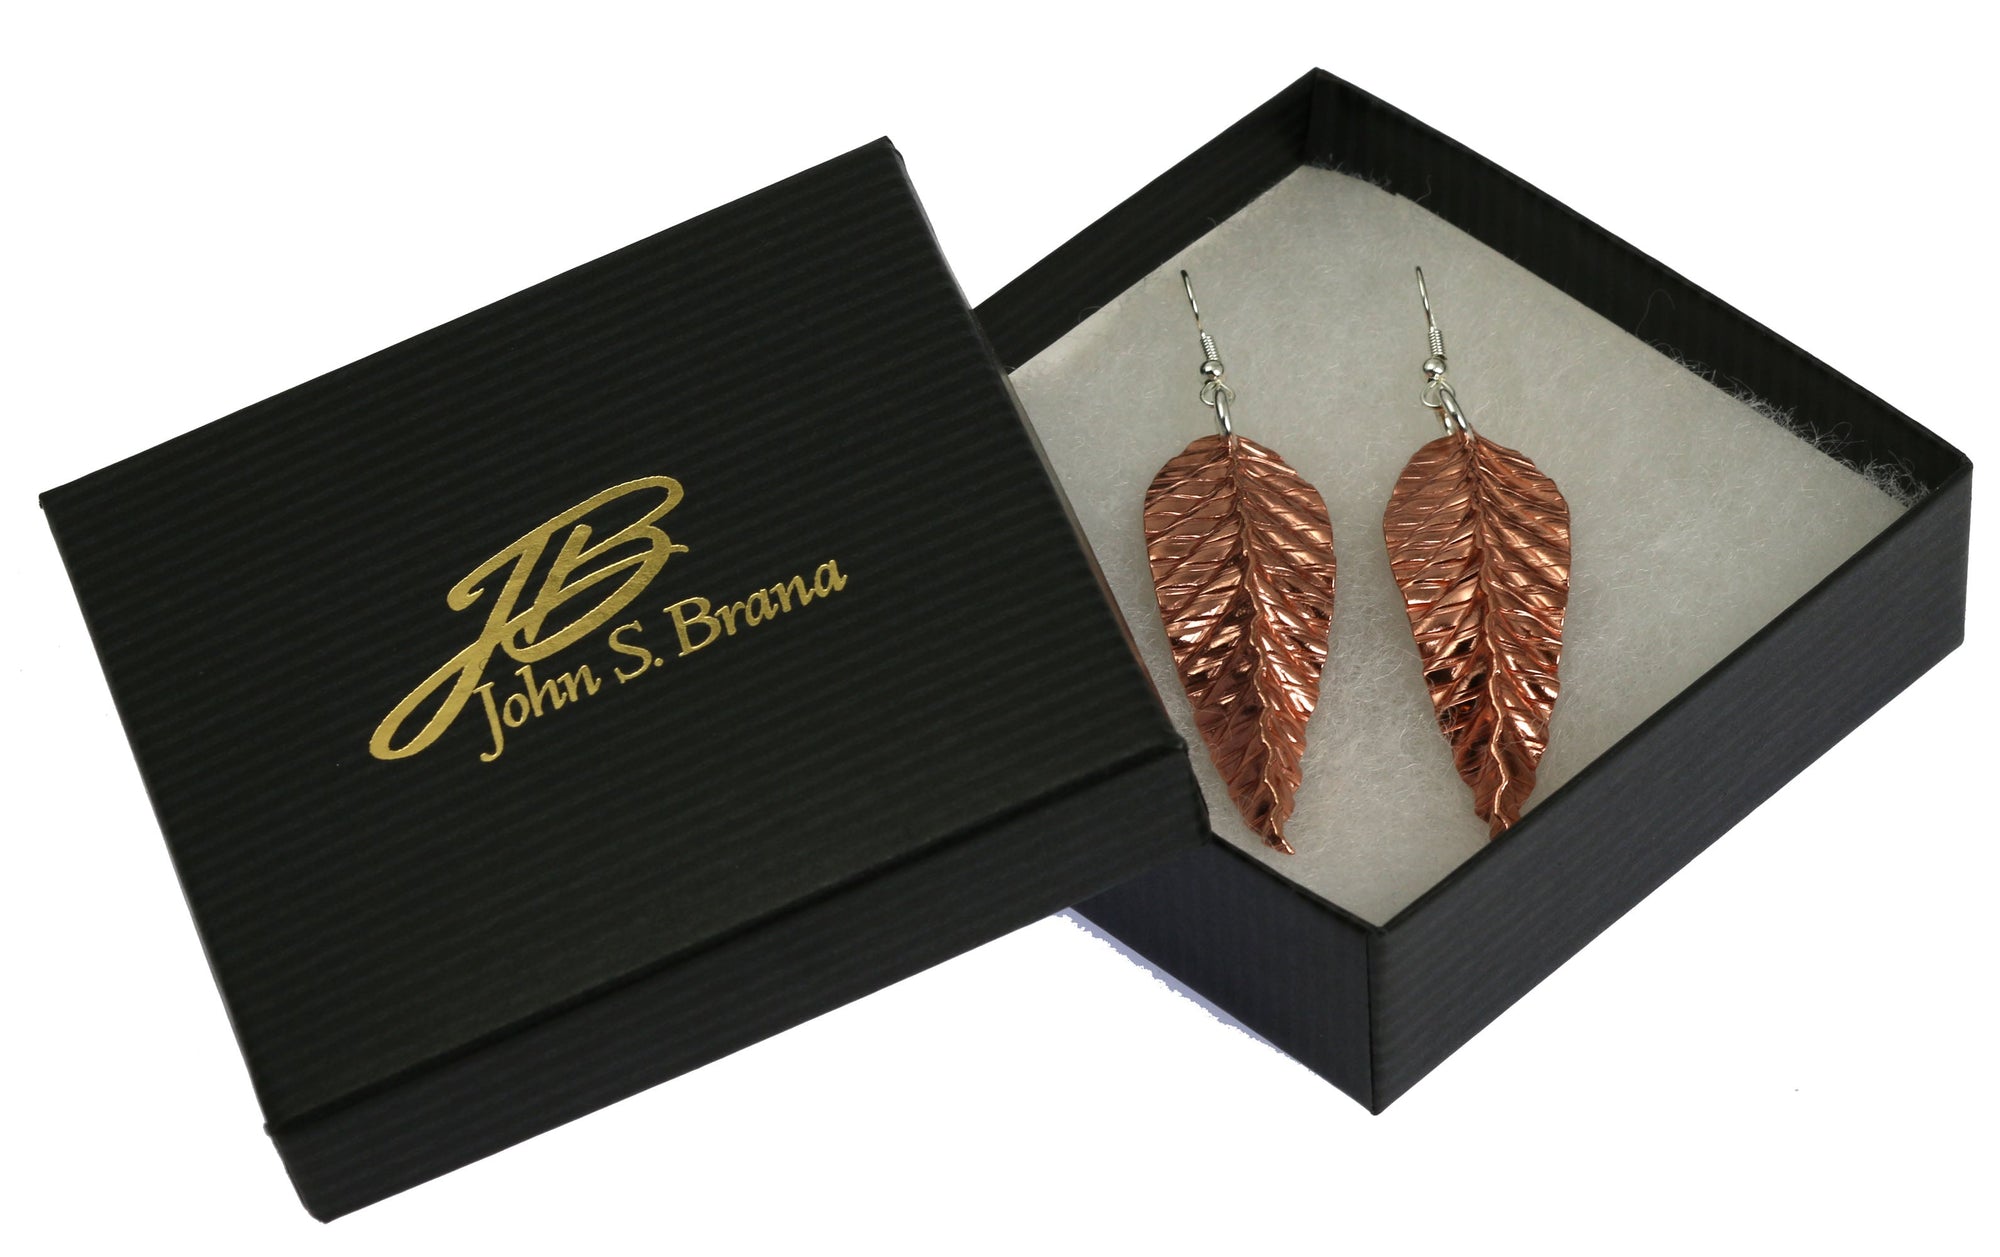 Corrugated Fold Formed Copper Leaf Earrings in Gift Box